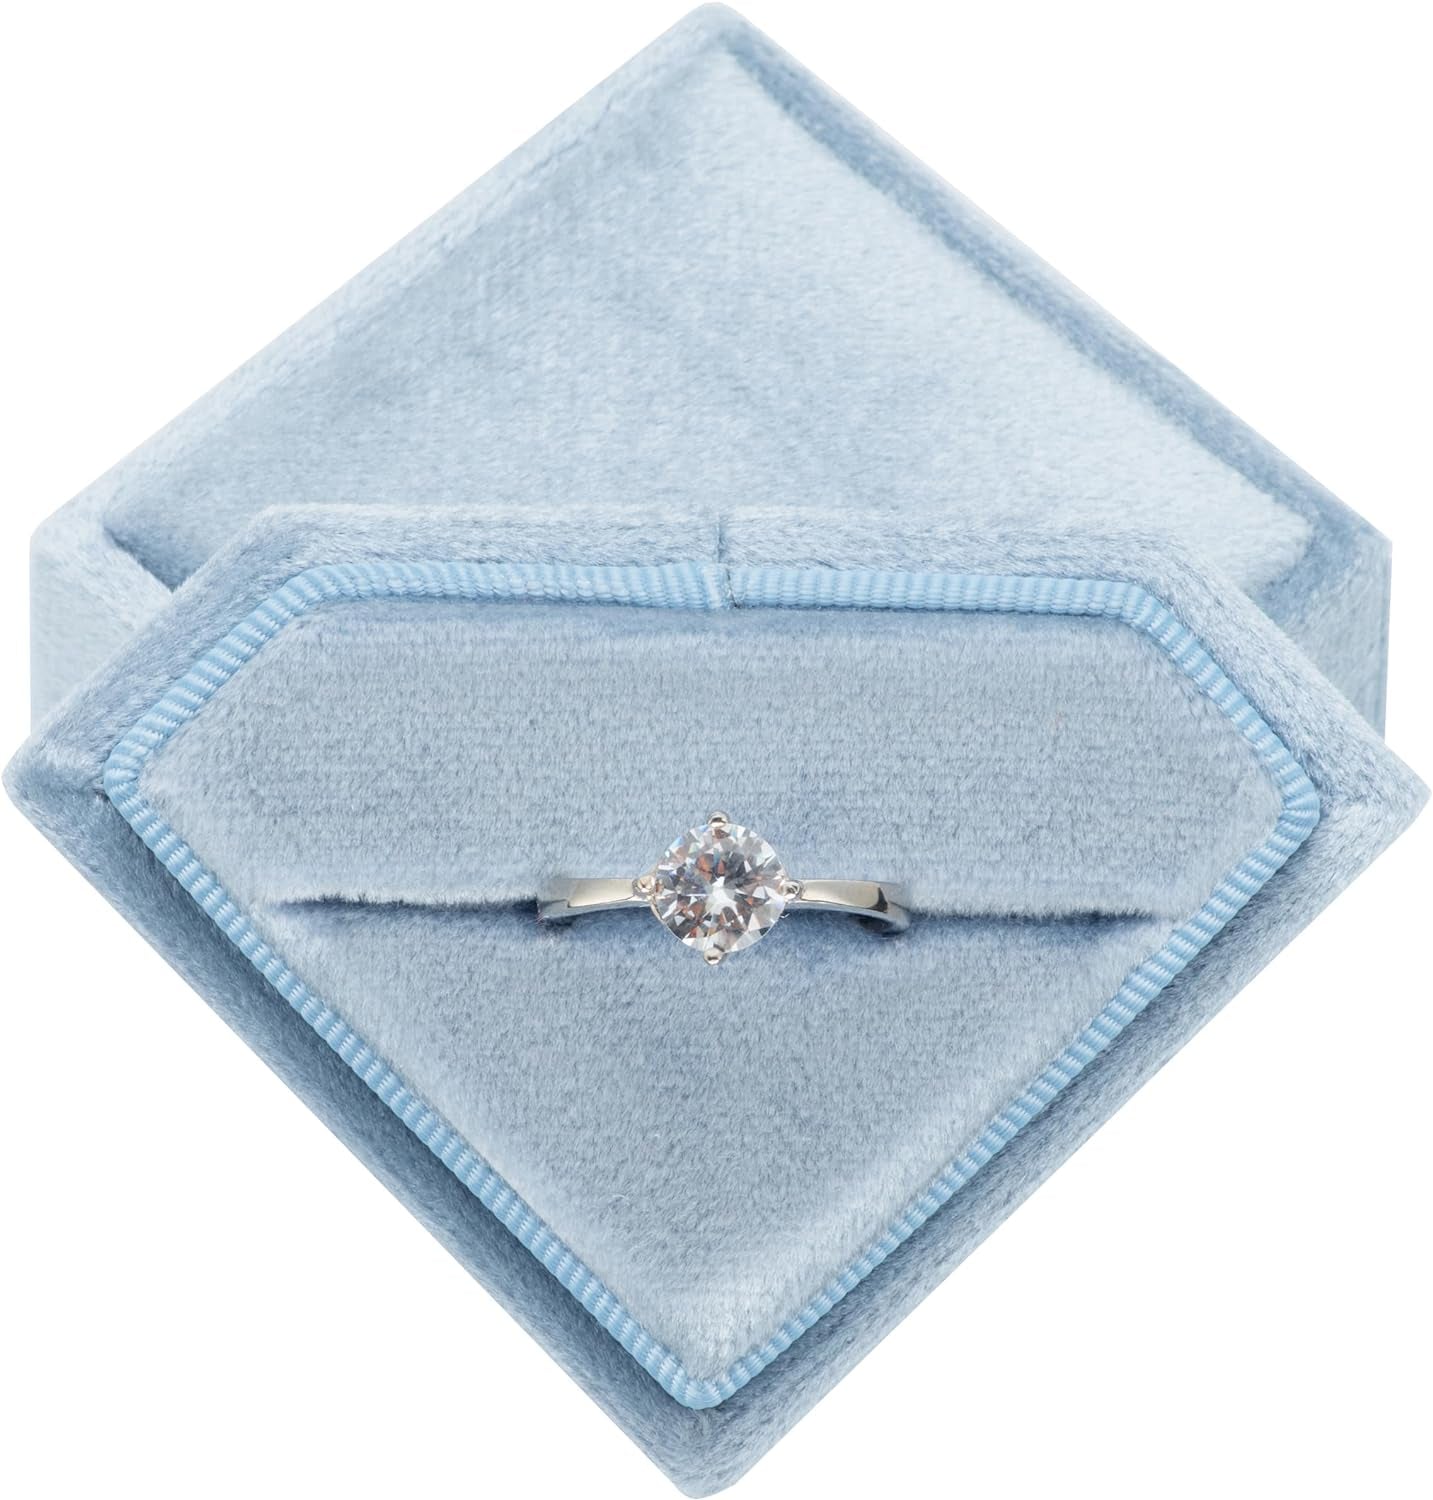 Diamond Shaped Velvet Single Ring Box for Engagement Proposal Wedding,Jewelry Ring Gift Box Jewelry Packaging Box (Blush Peach)